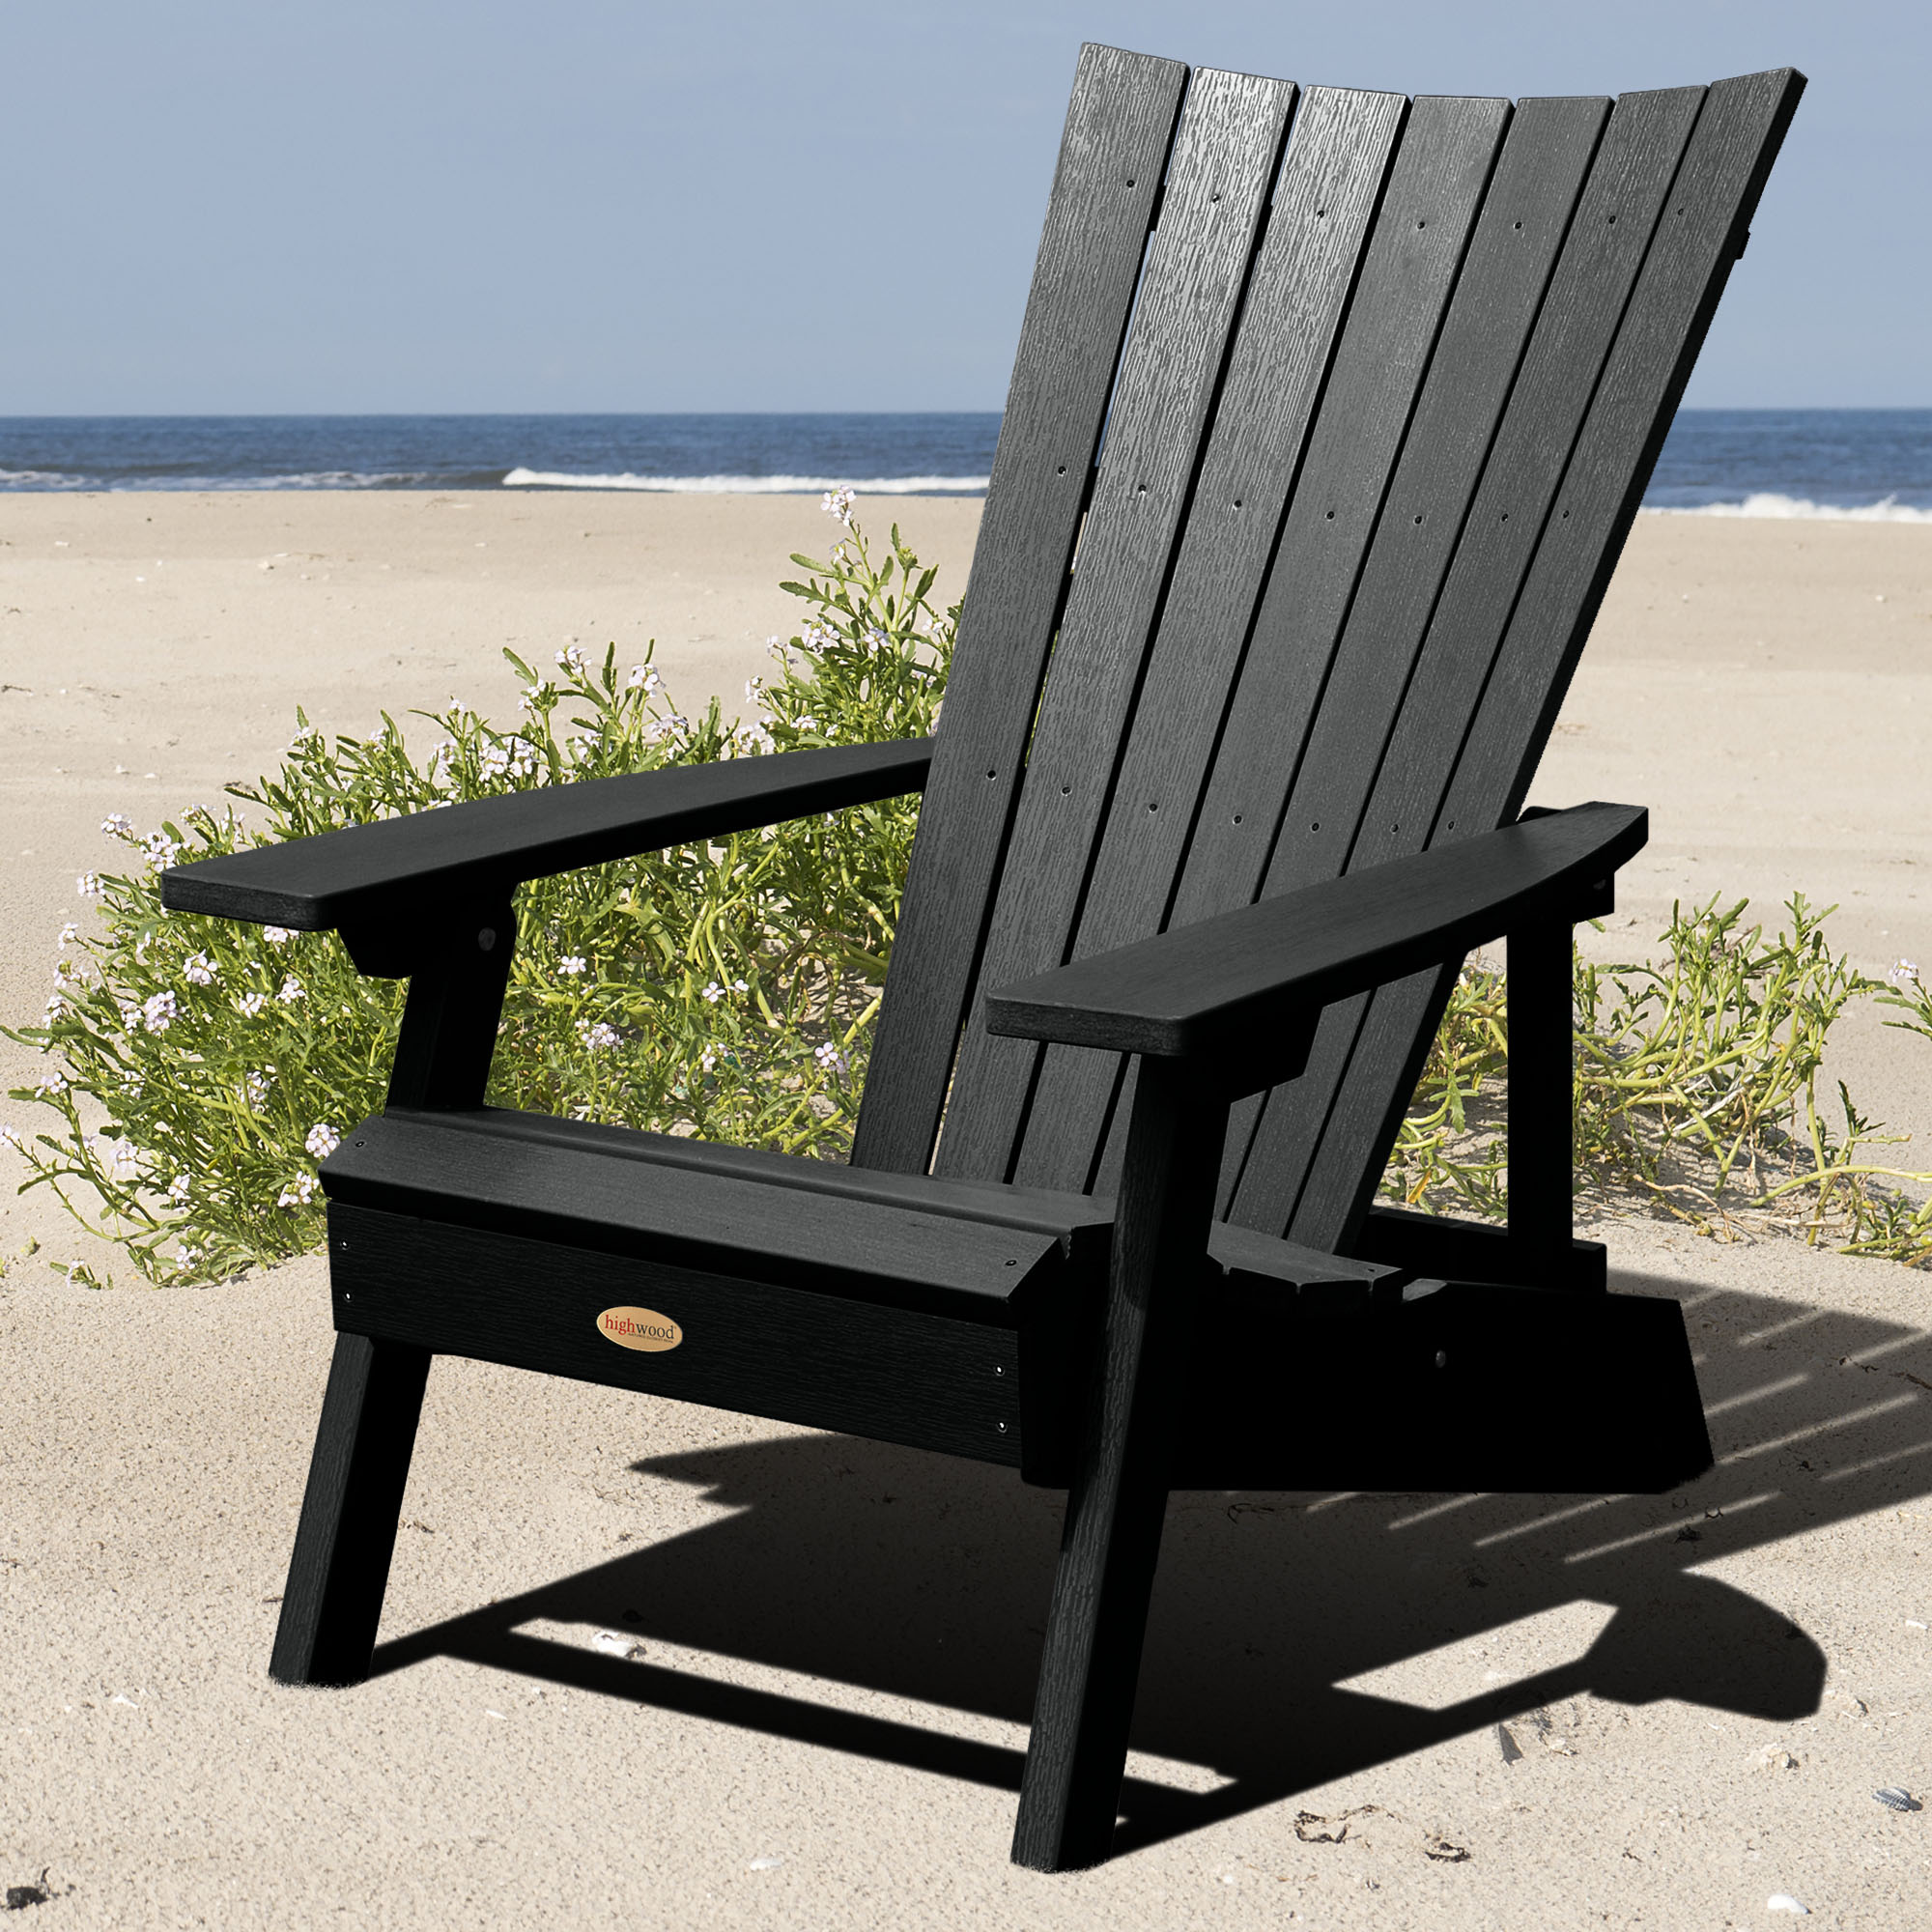 Highwood Manhattan Beach Adirondack Chair with Folding Ottoman - image 4 of 6